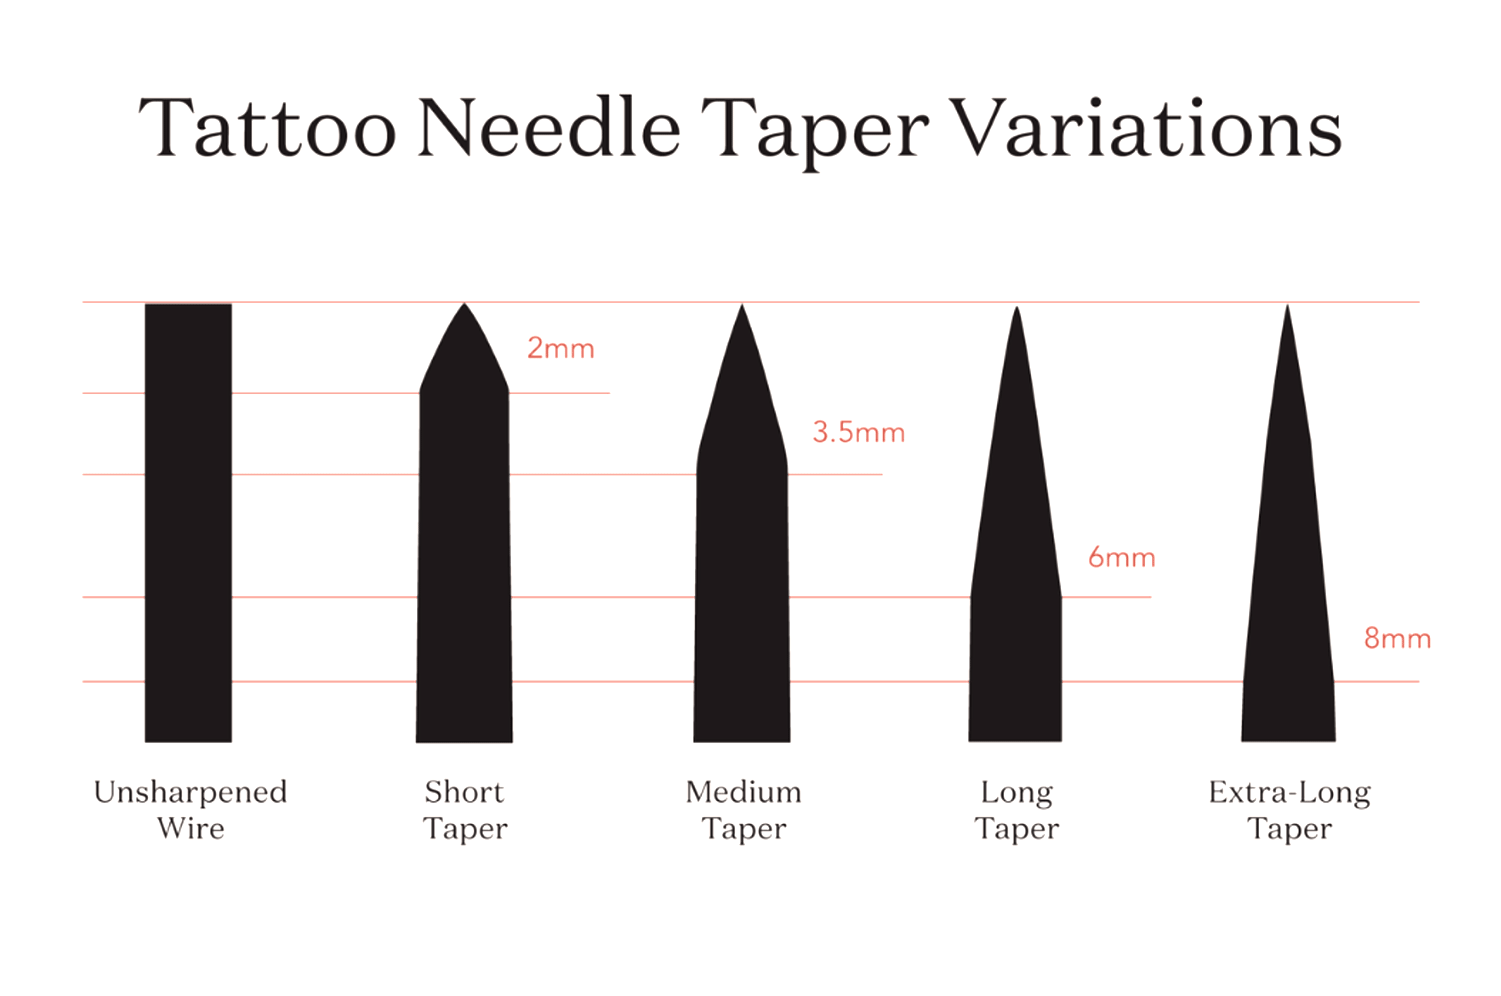 Tattoo needle taper variations